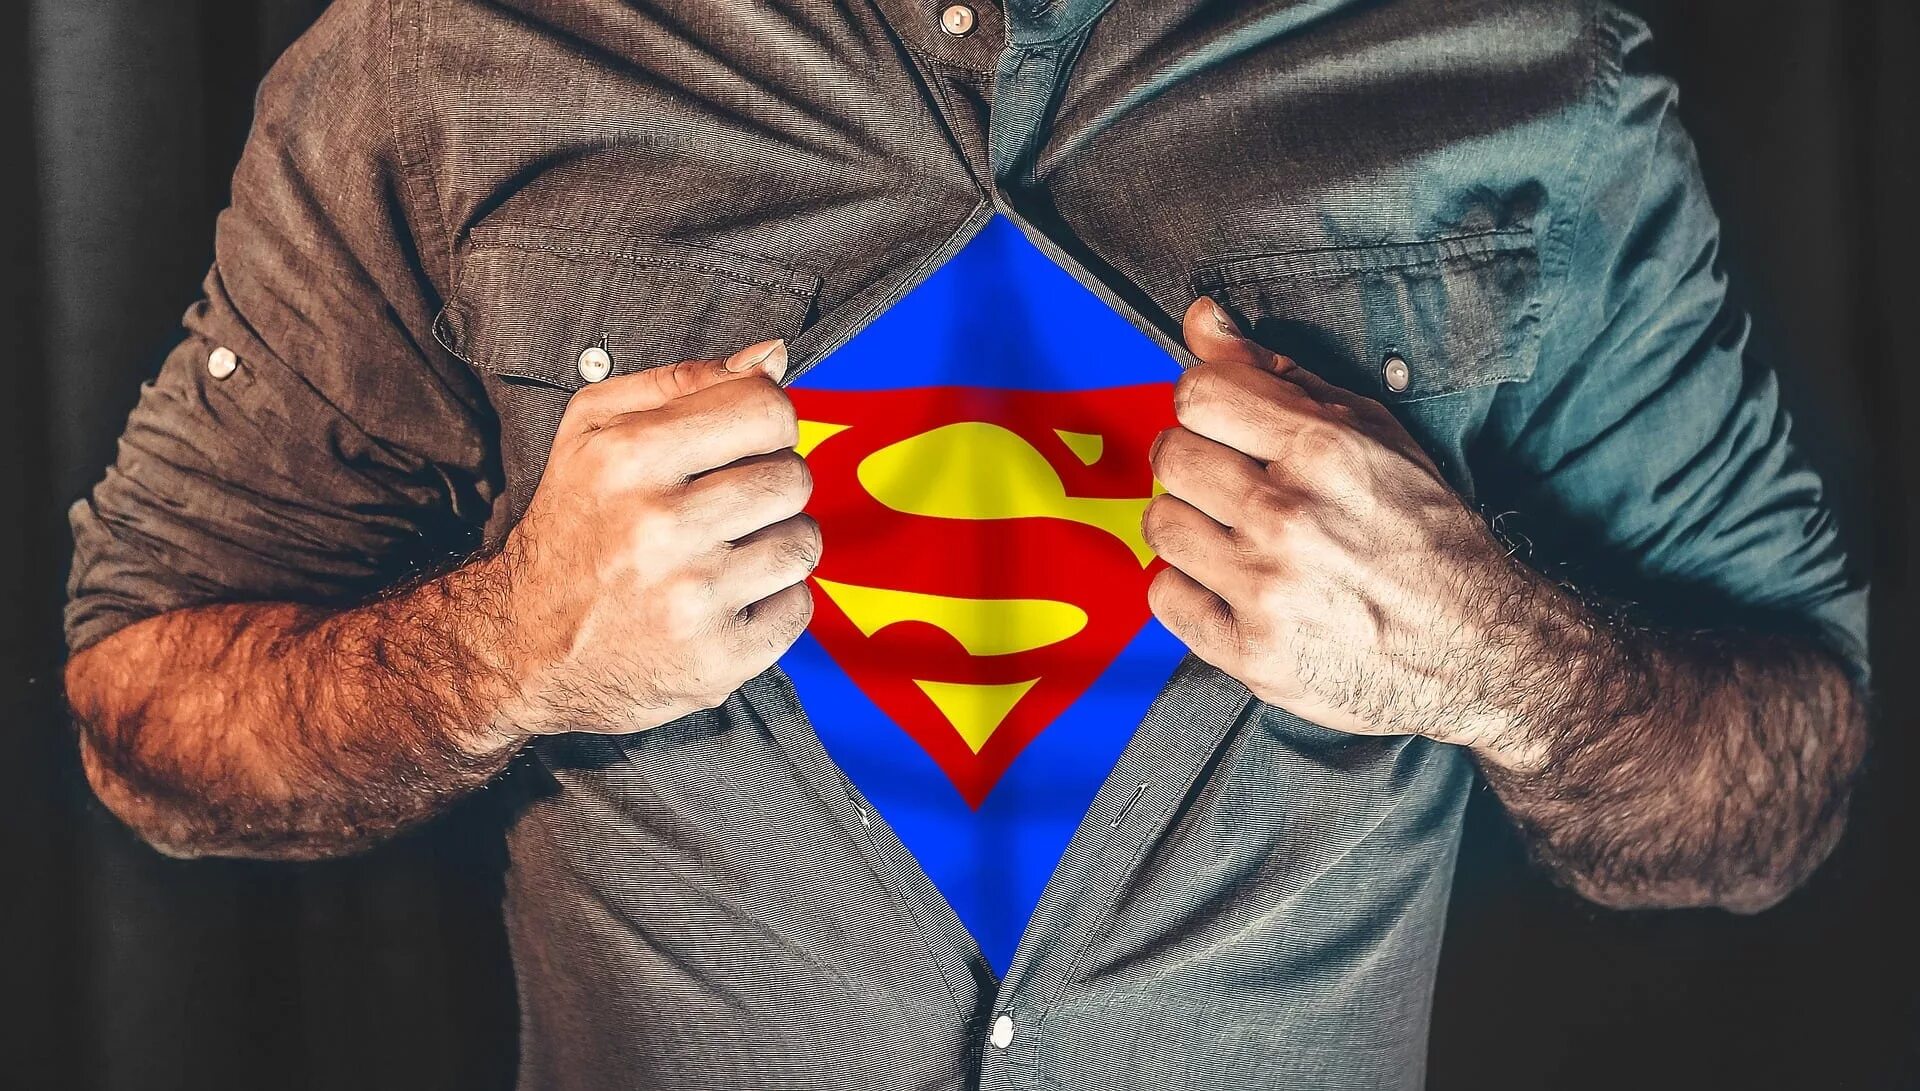 Man society. Человек в костюме Супермена. Мужчина Супермен. Люди в футболках Супермена. Супермен под рубашкой.